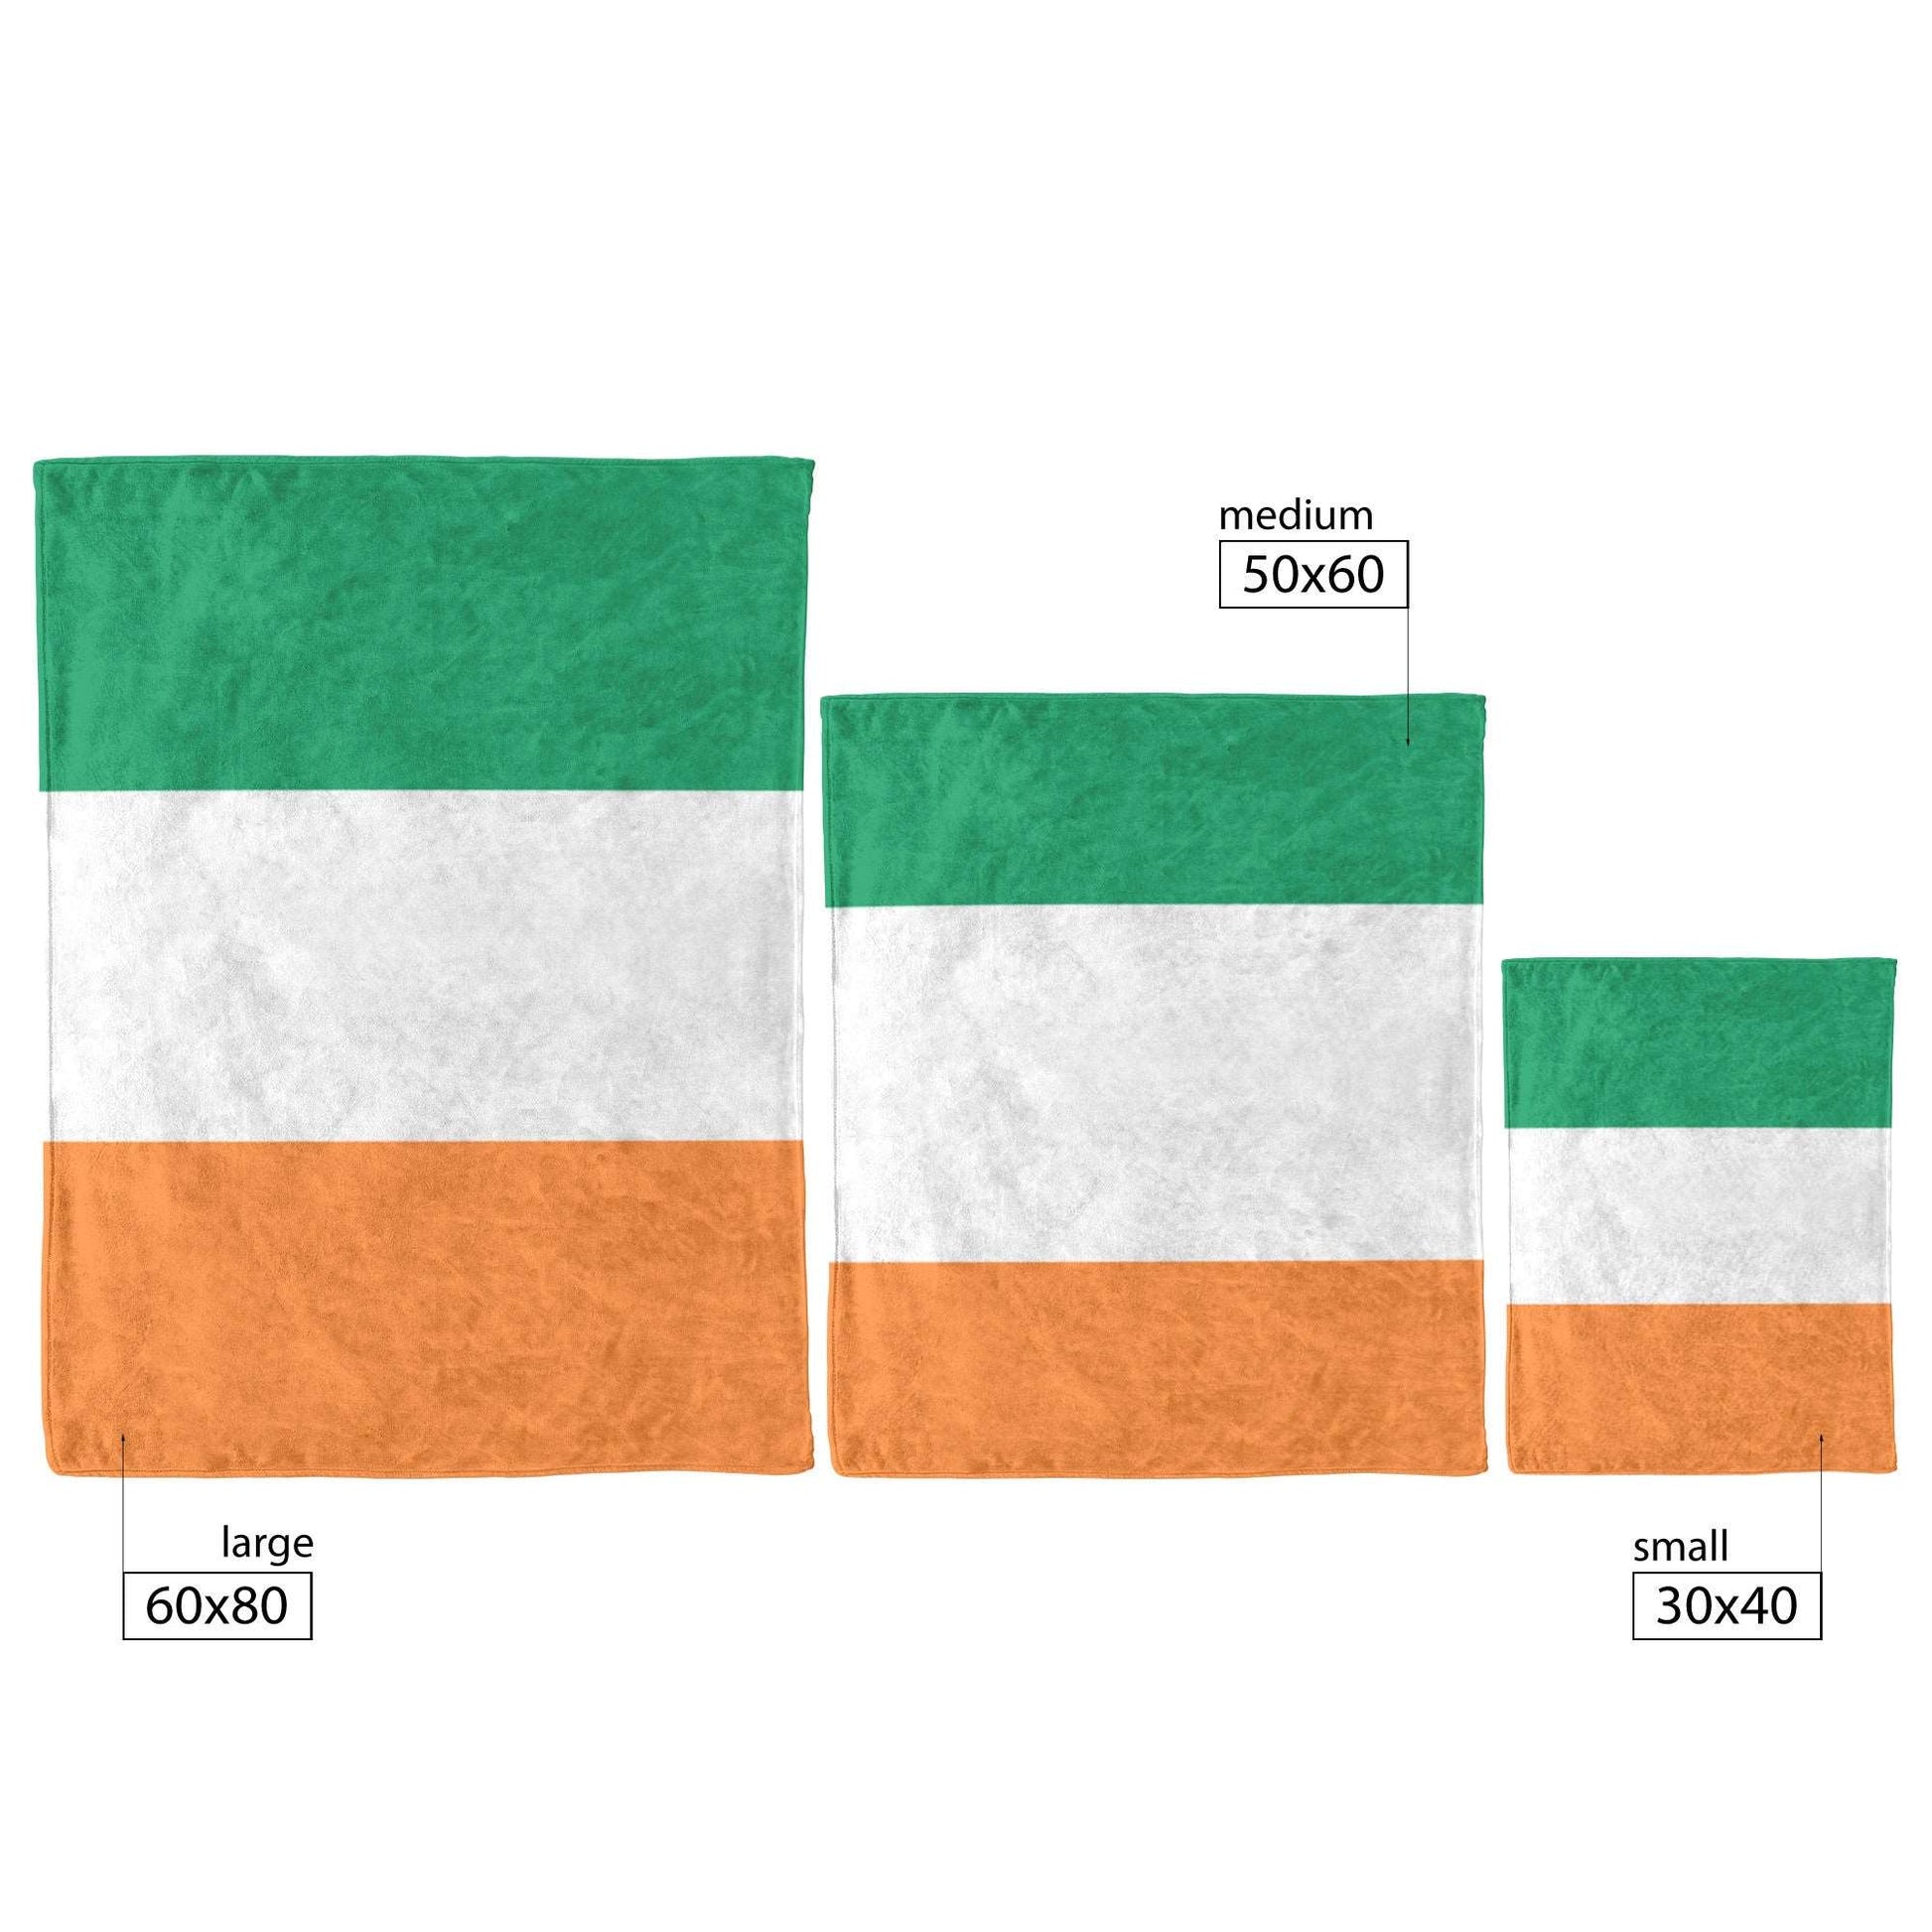 Irish Housewarming Gift for Irish Family Blanket in Ireland Flag Pattern St Patricks Day Ireland Decor